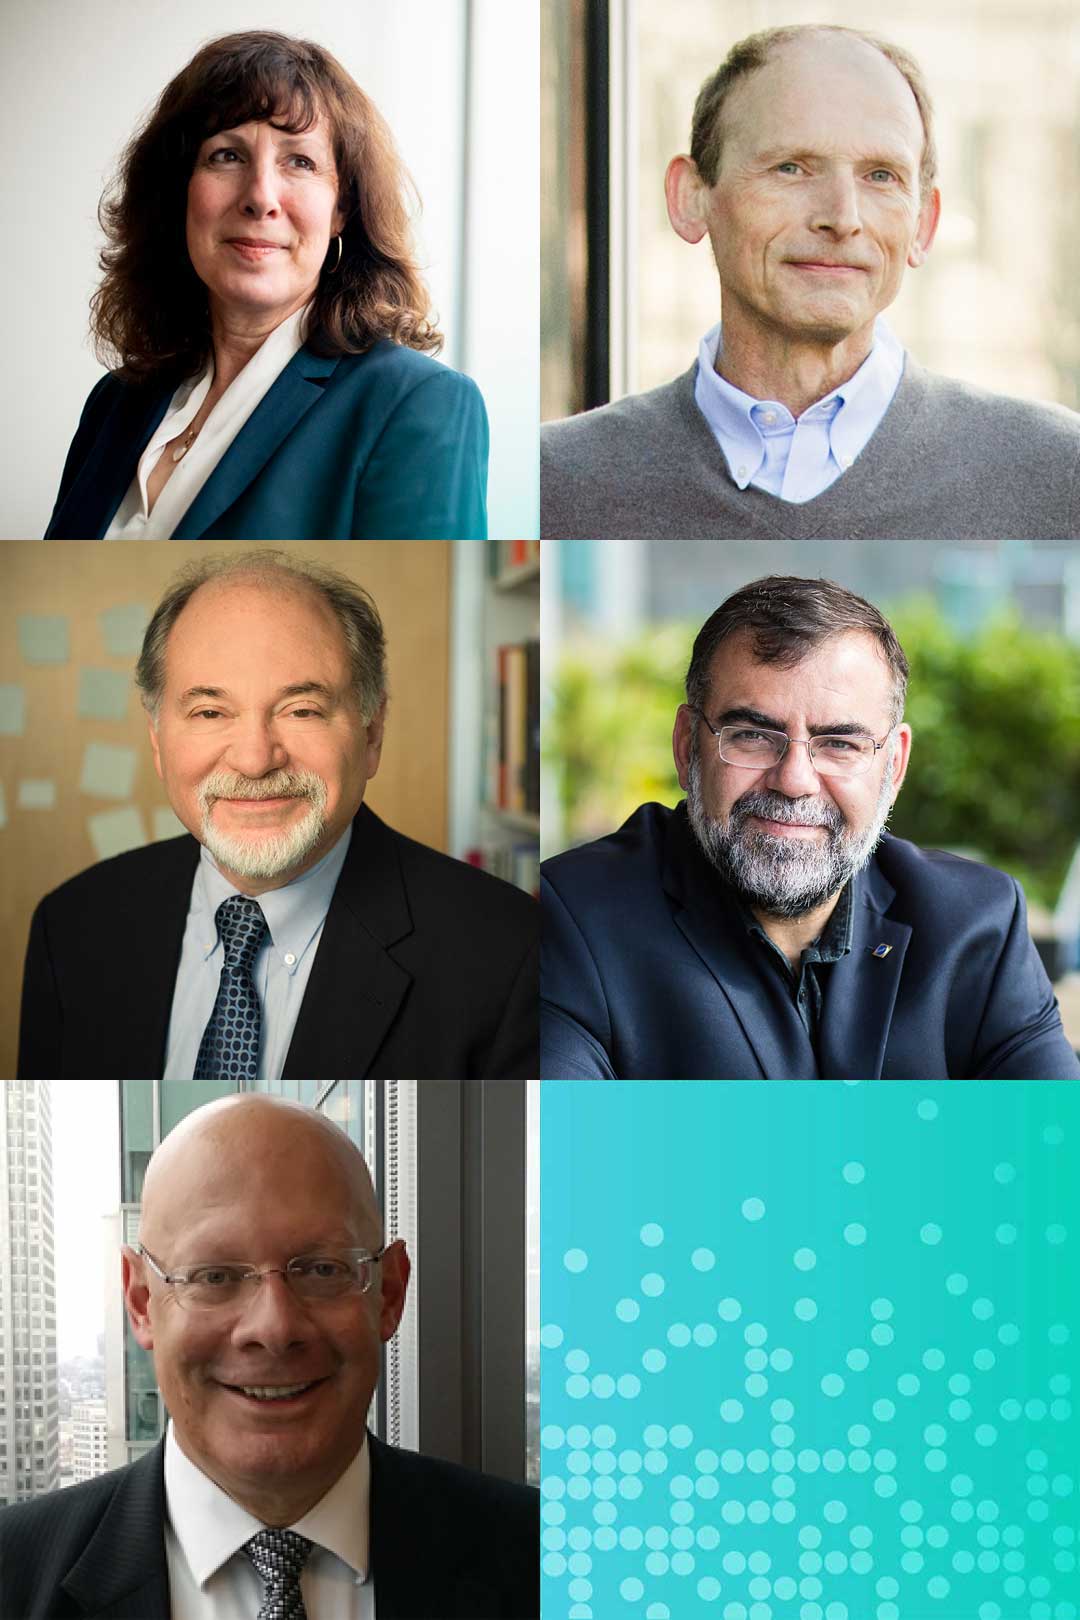 ACM Fellows (clockwise from upper left): Carla Brodley (2016), Matthias Felleisen (2006), Ricardo Baeza-Yates (2009), Renee Miller (2009) no photo available, Usama Fayyad (2007), Mitchell Wand (2007)